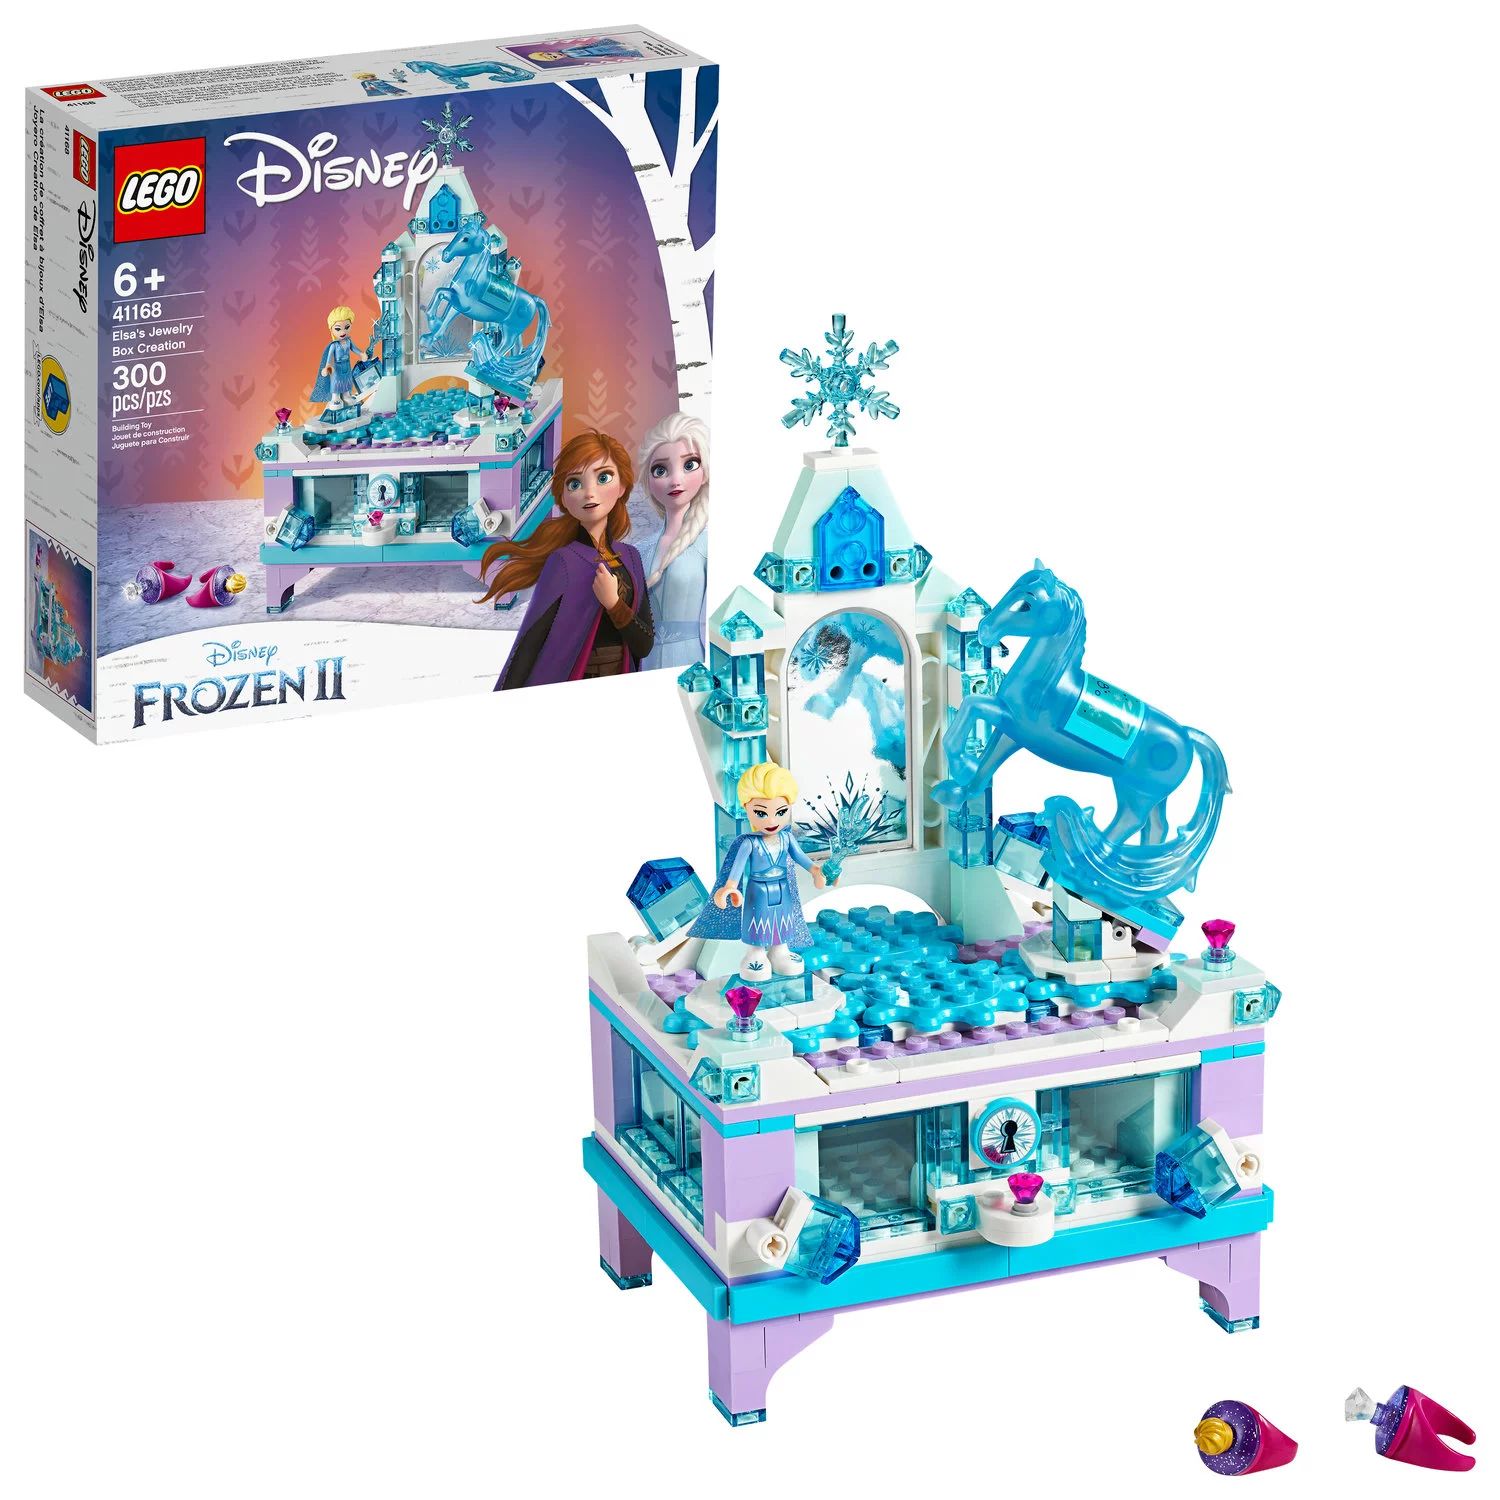 LEGO Disney Frozen II Elsa's Jewelry Box Creation 41168 (300 Pieces) | Walmart (US)